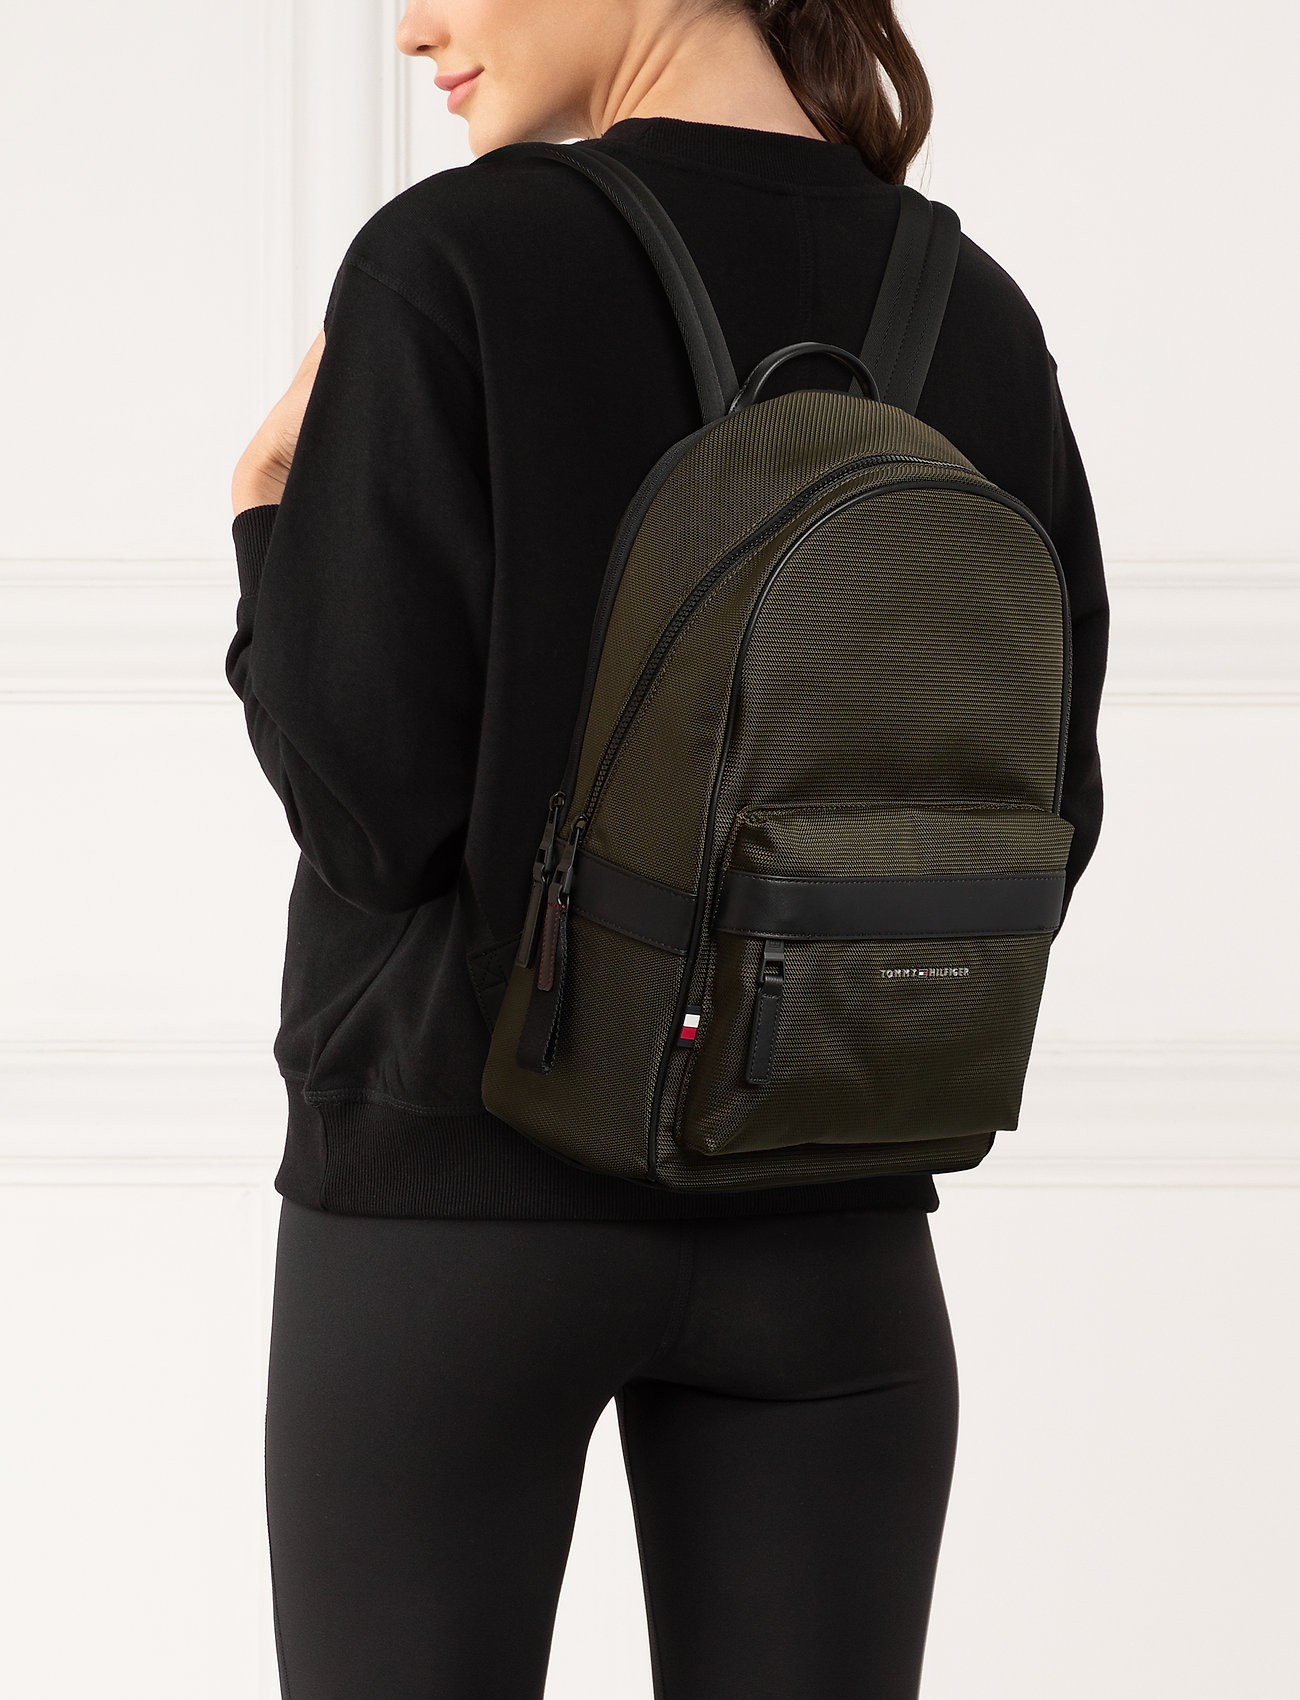 elevated backpack